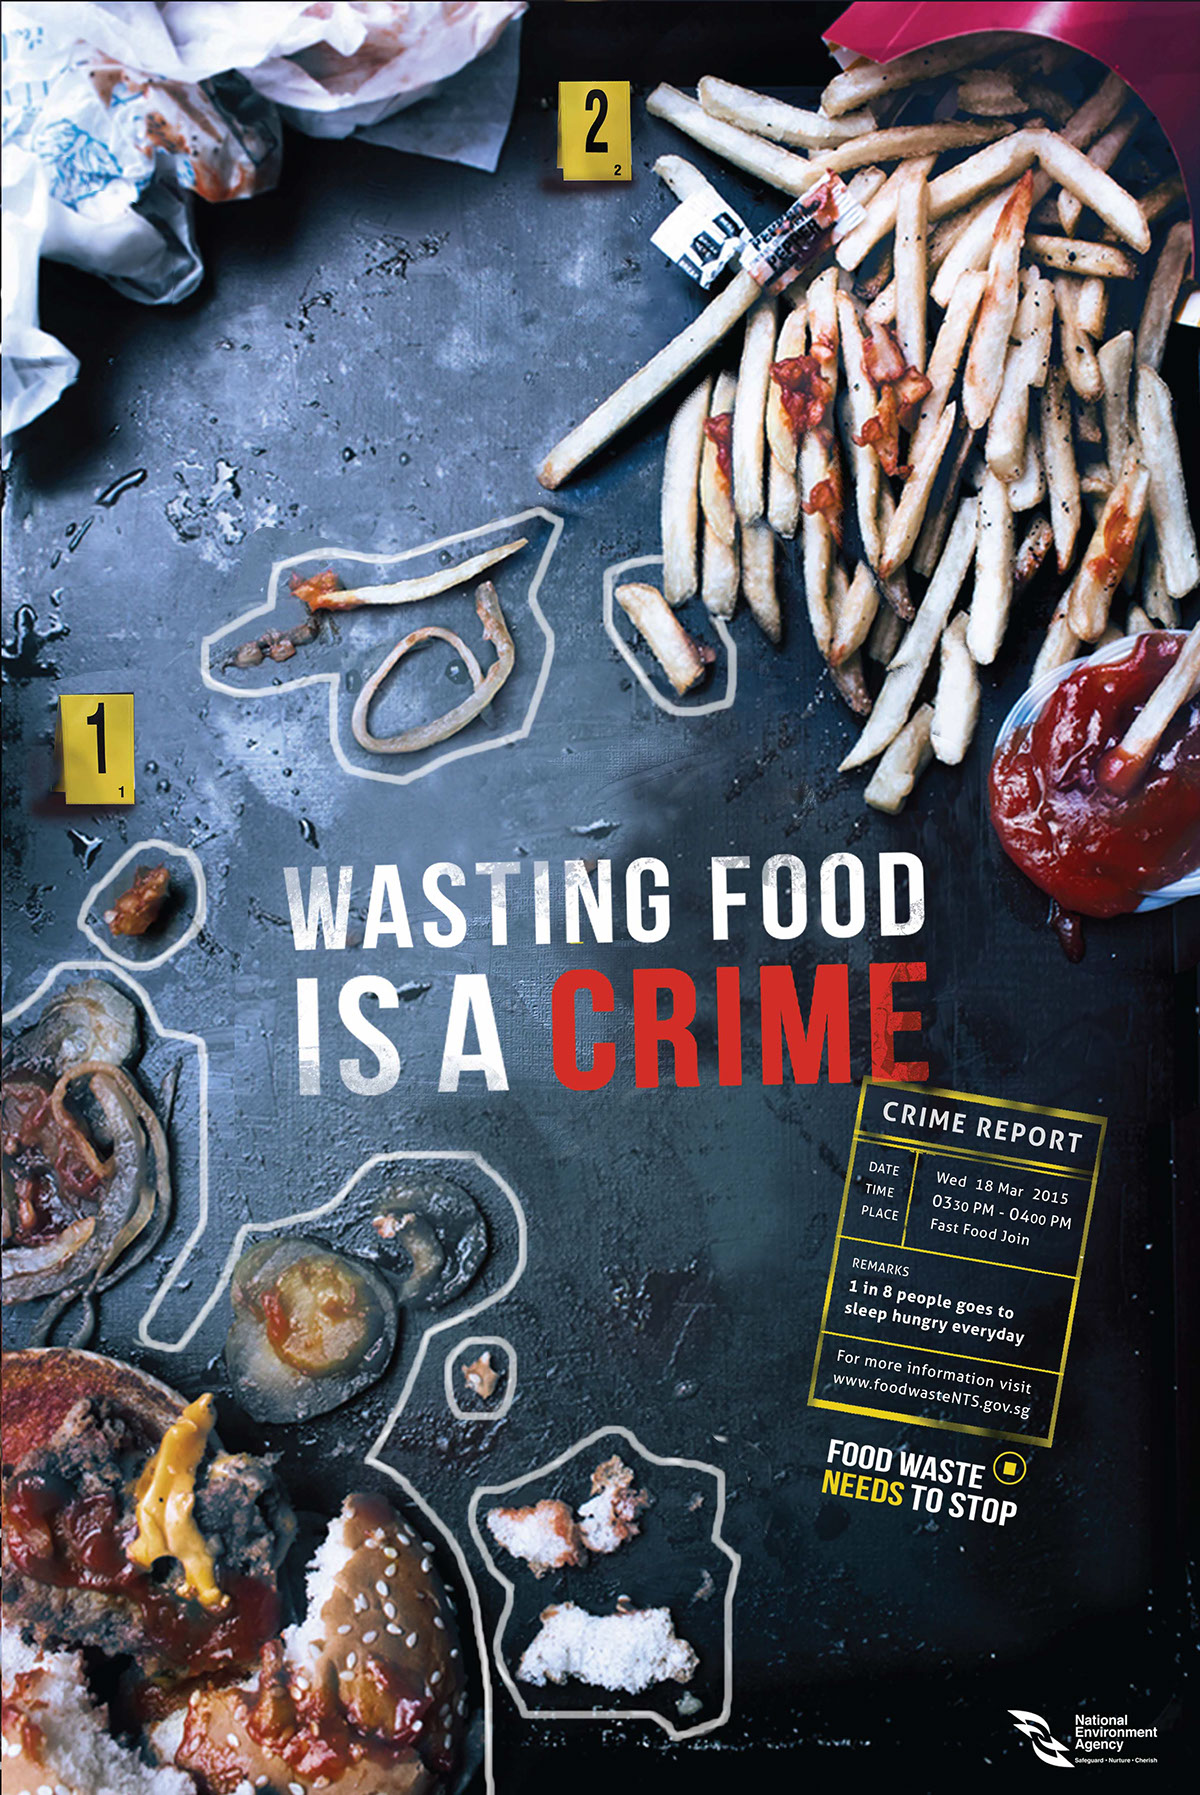 Foodwaste campaign integratedcampaign